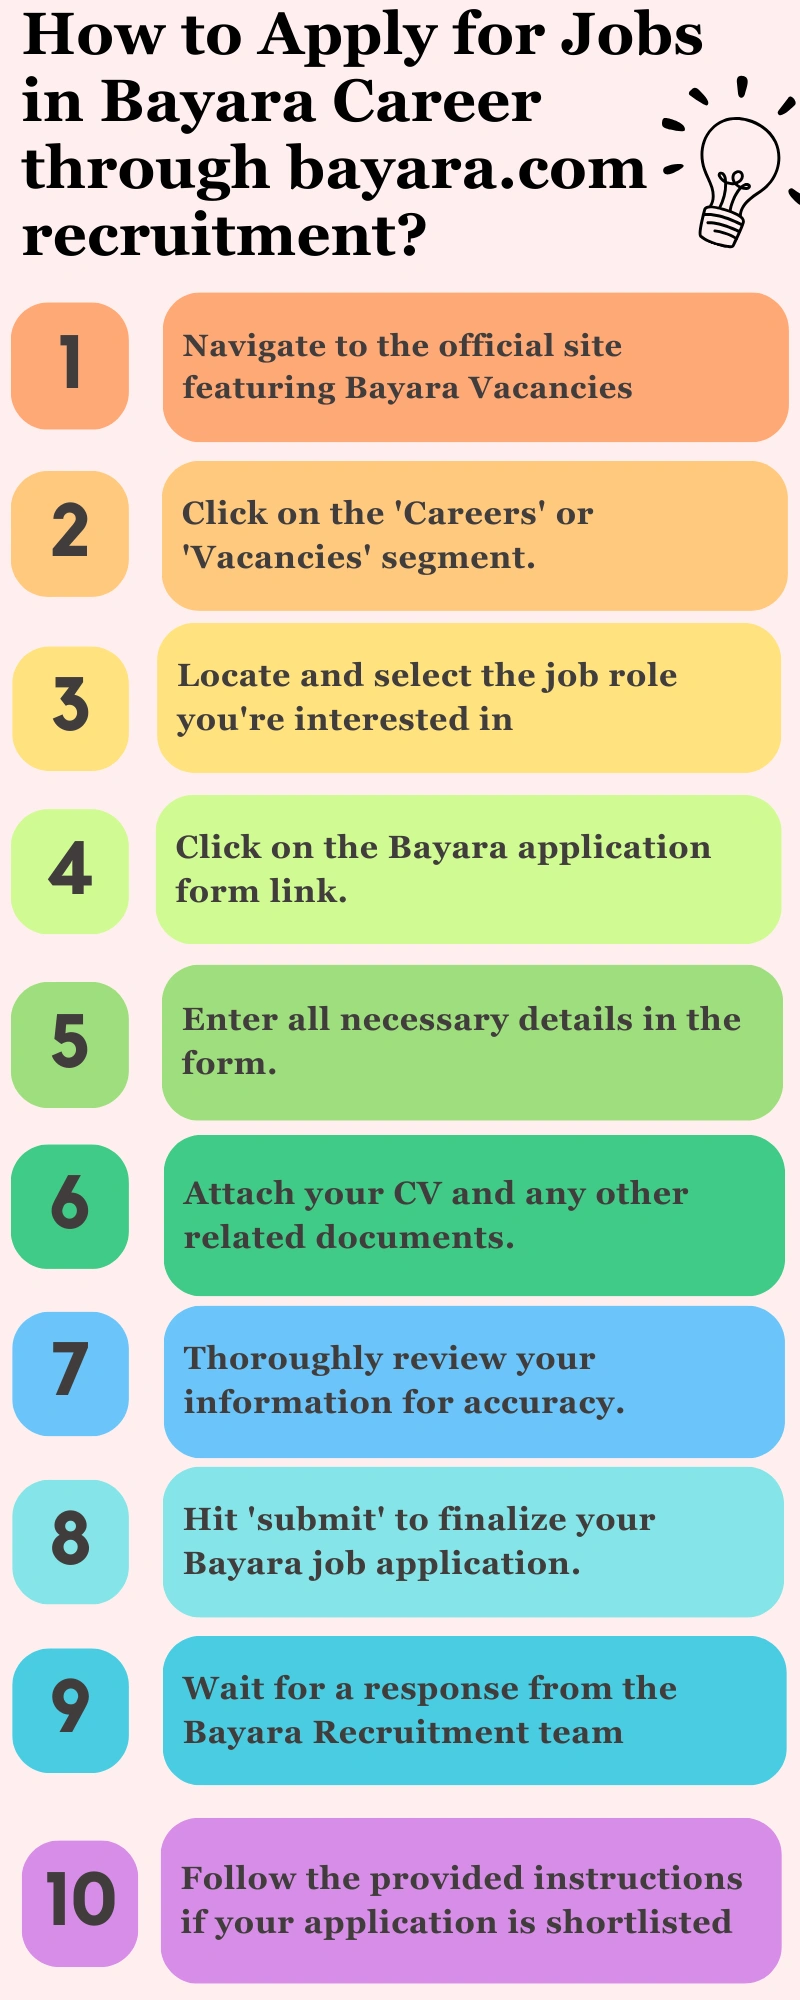 How to Apply for Jobs in Bayara Career through bayara.com recruitment?